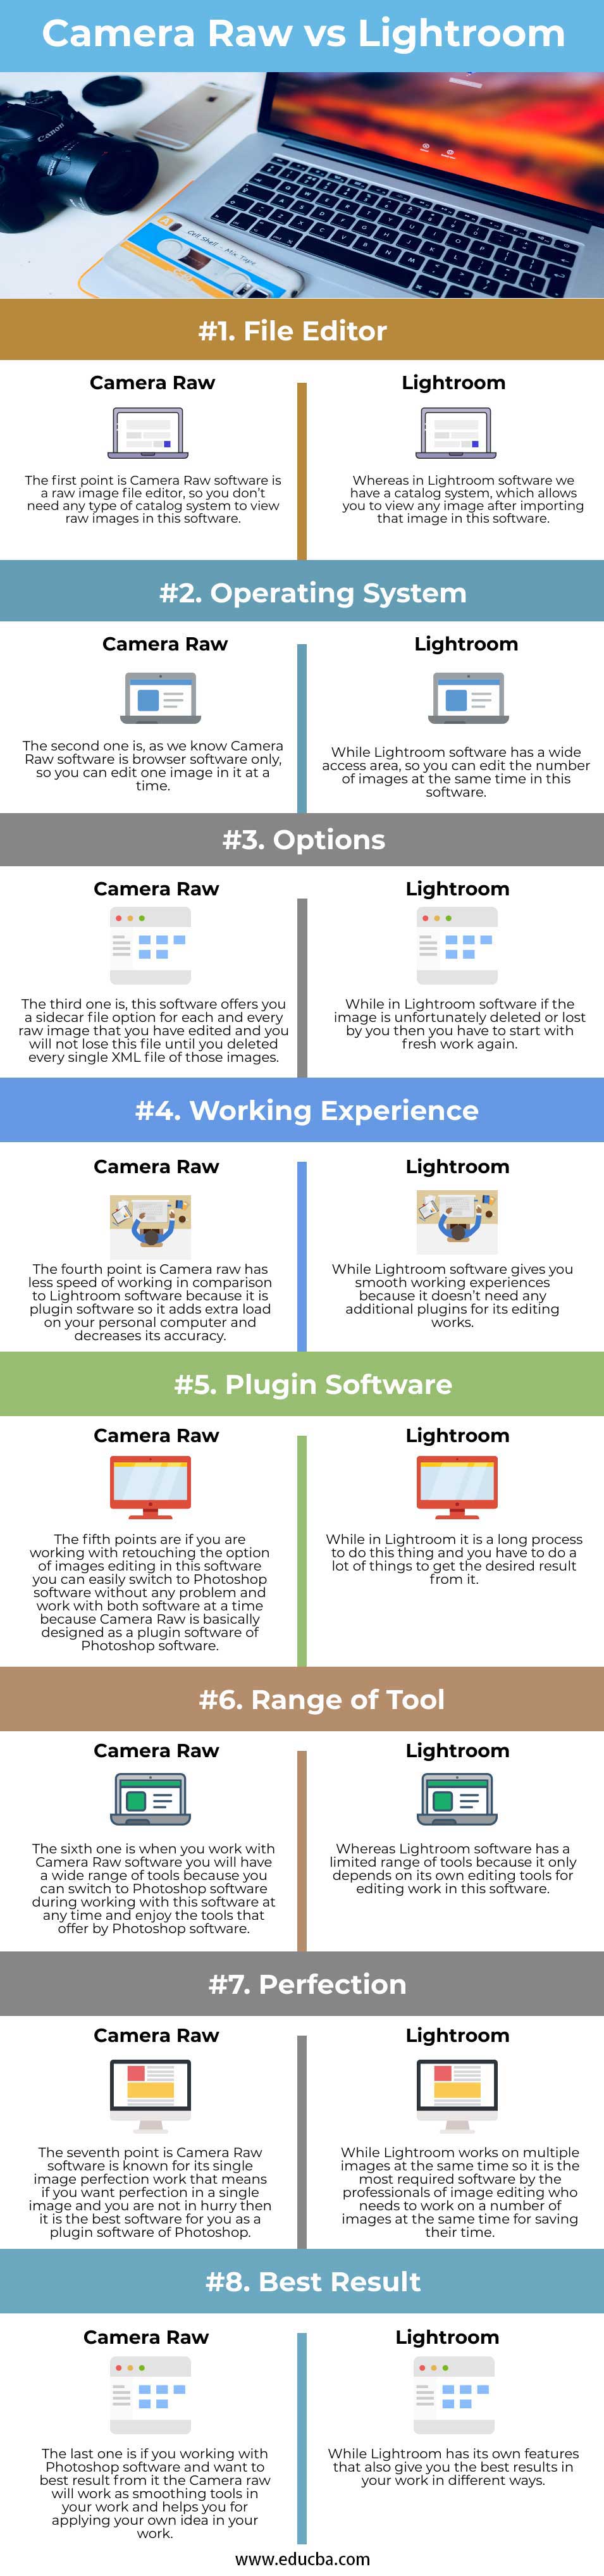 Camera Raw vs Lightroom info